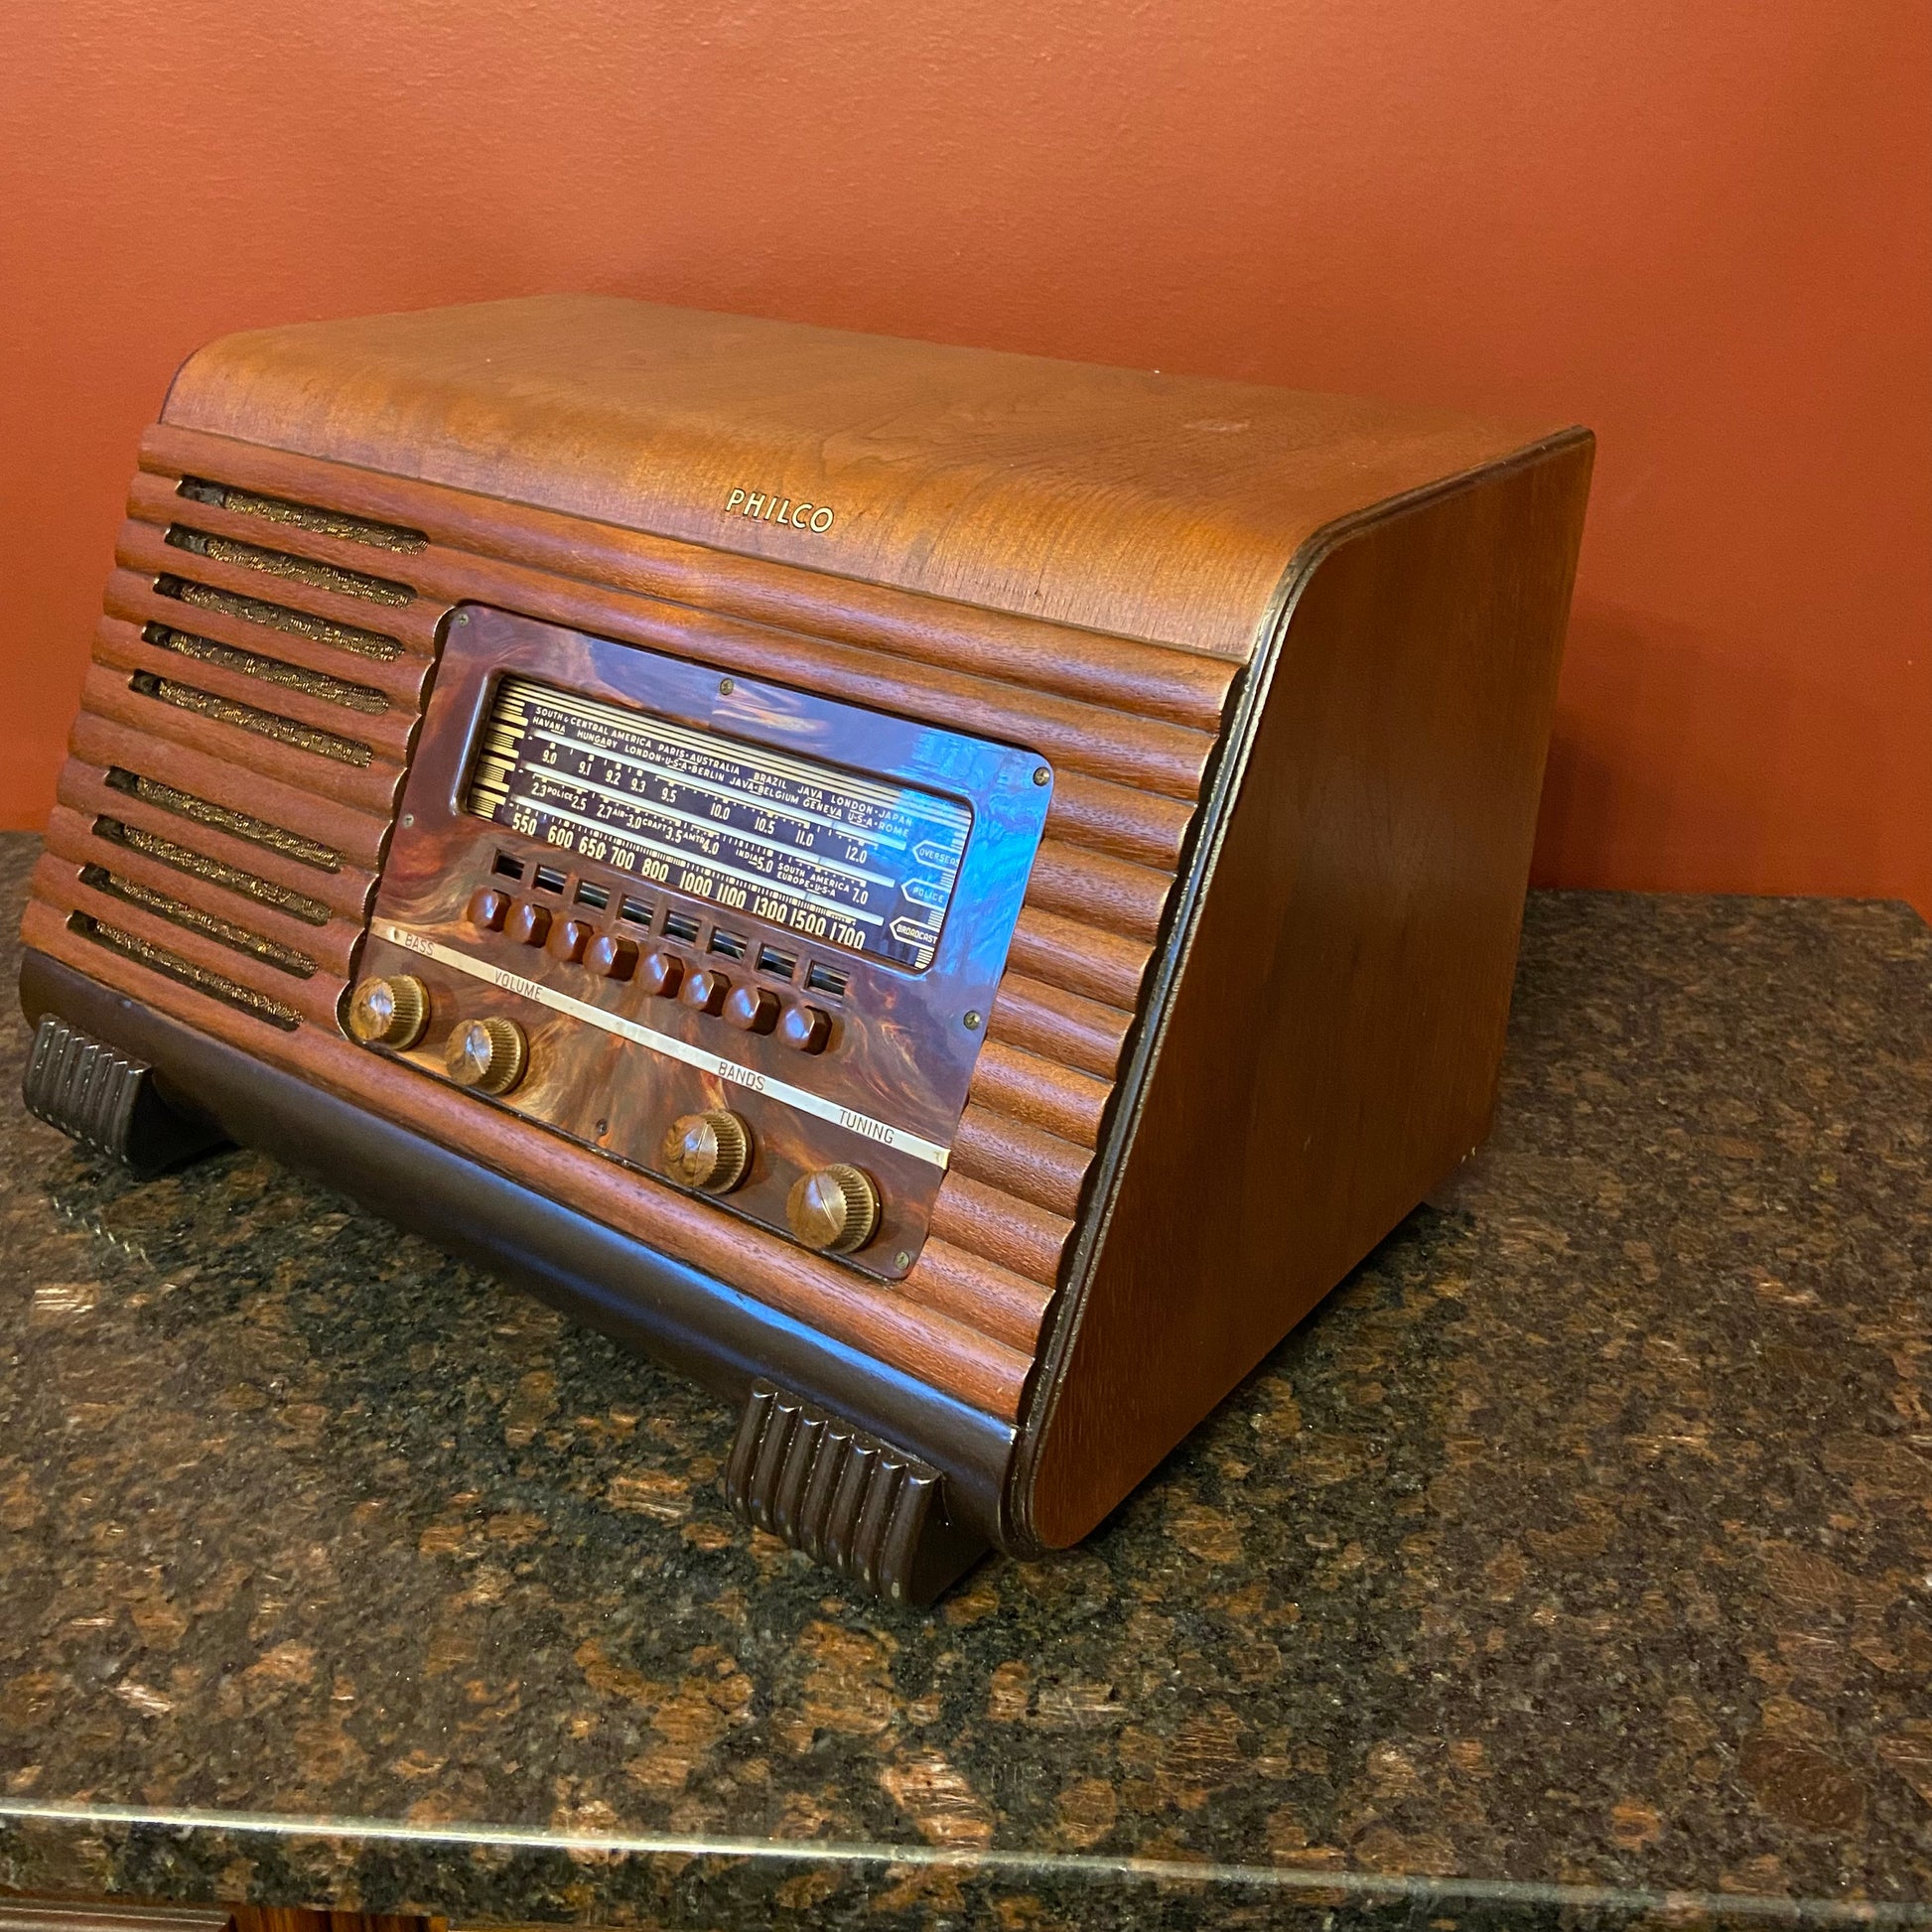 philco radio models